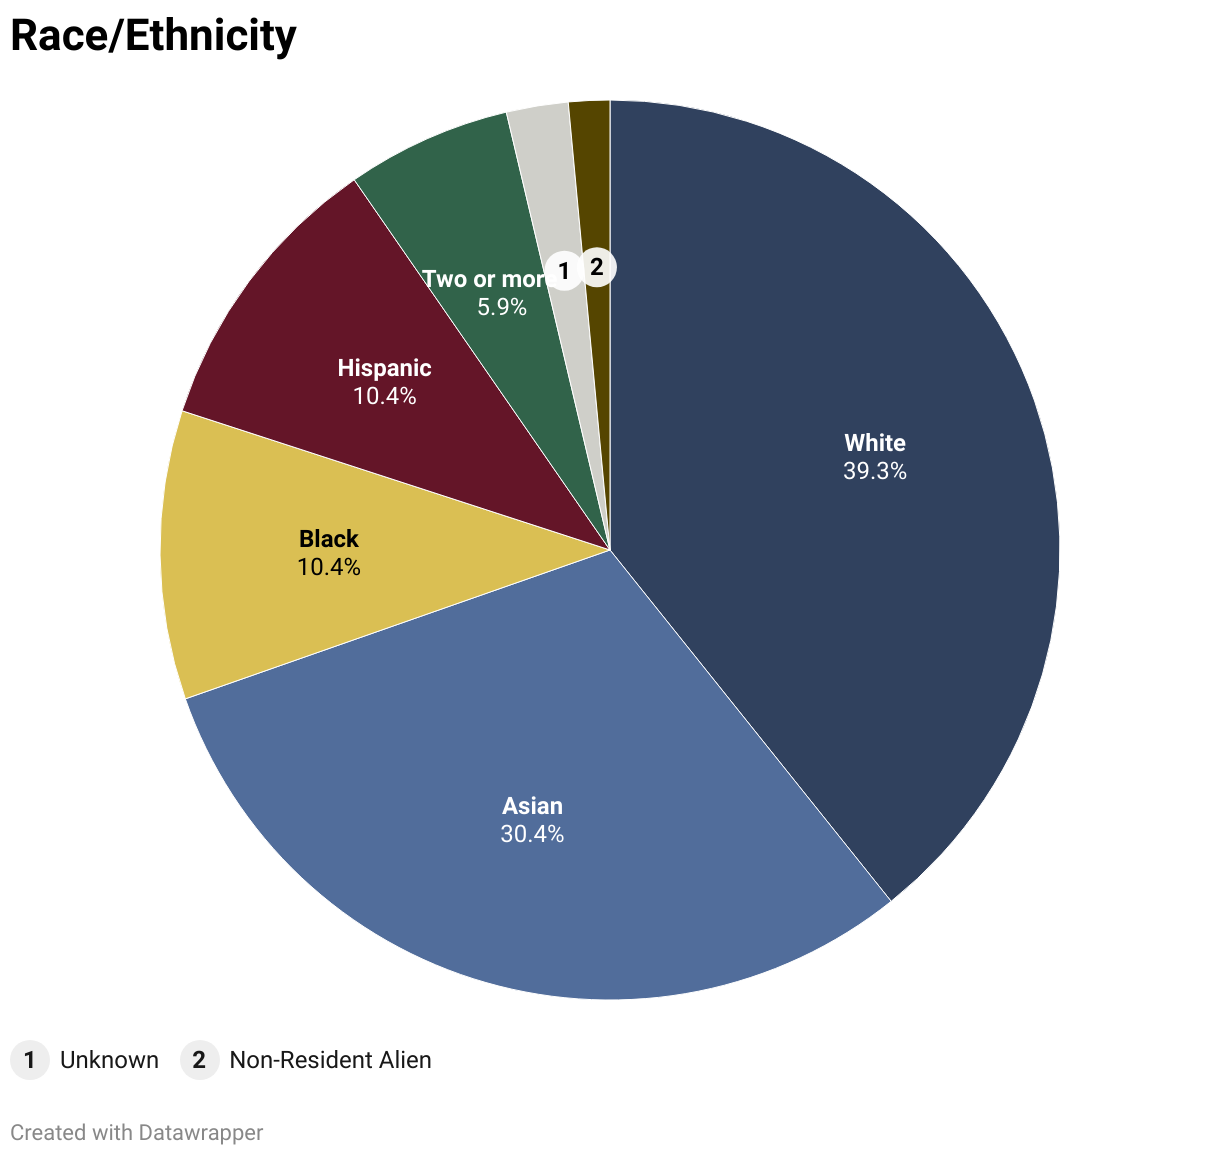 30.37% Asian, 10.37% Black, 10.37% Hispanic, 5.92% Two or more, 1.48% Non-Resident Alien, 2.22% Unknown, 39.25% White